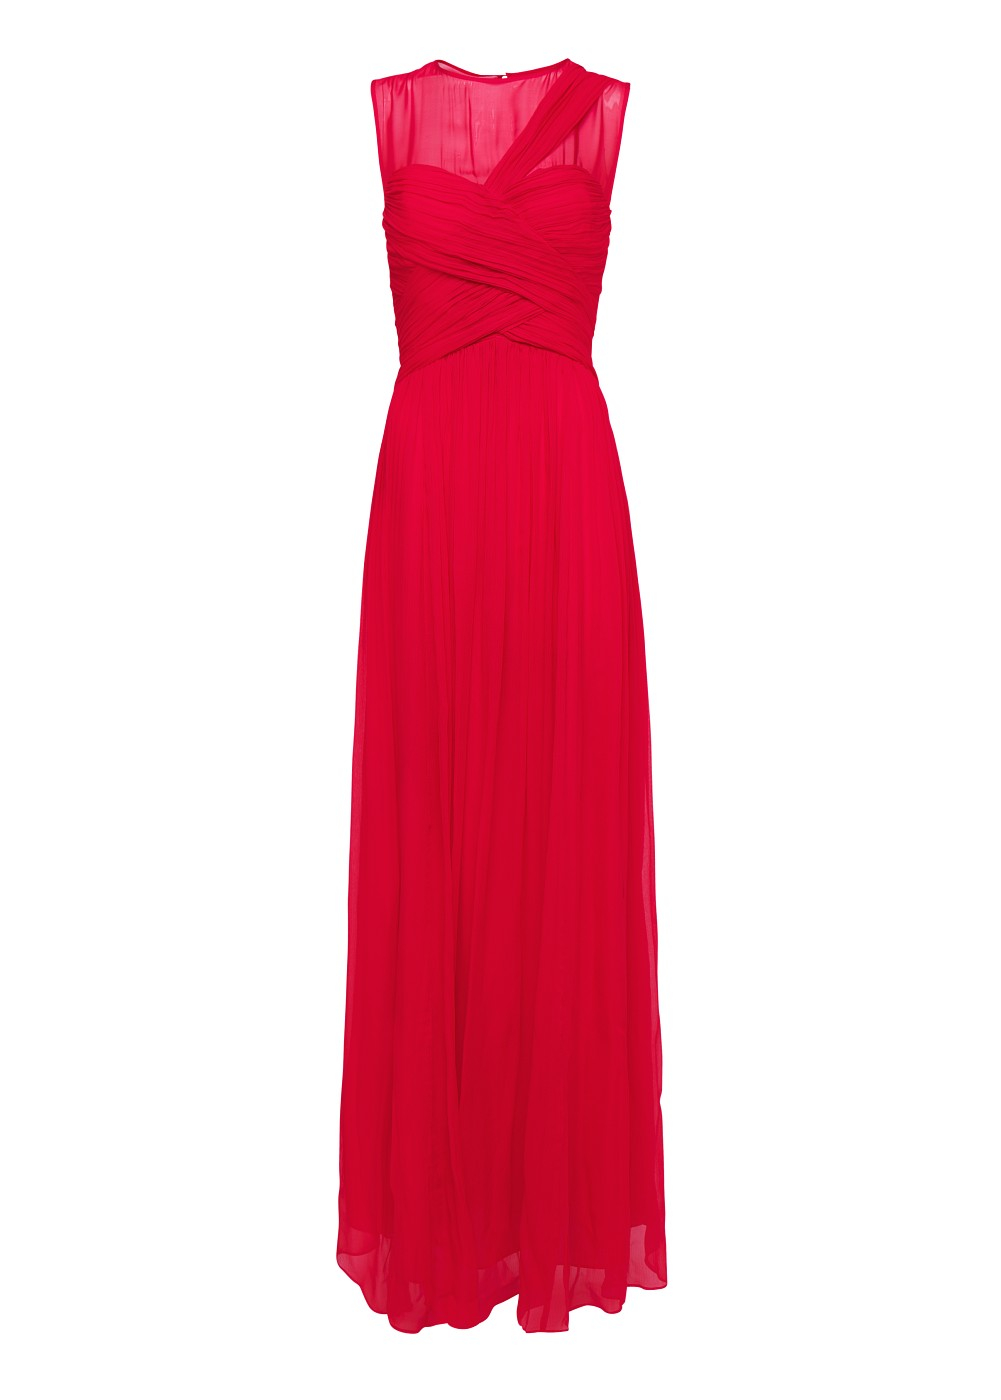 Lyst - Mango Draped Long Silk Dress in Red